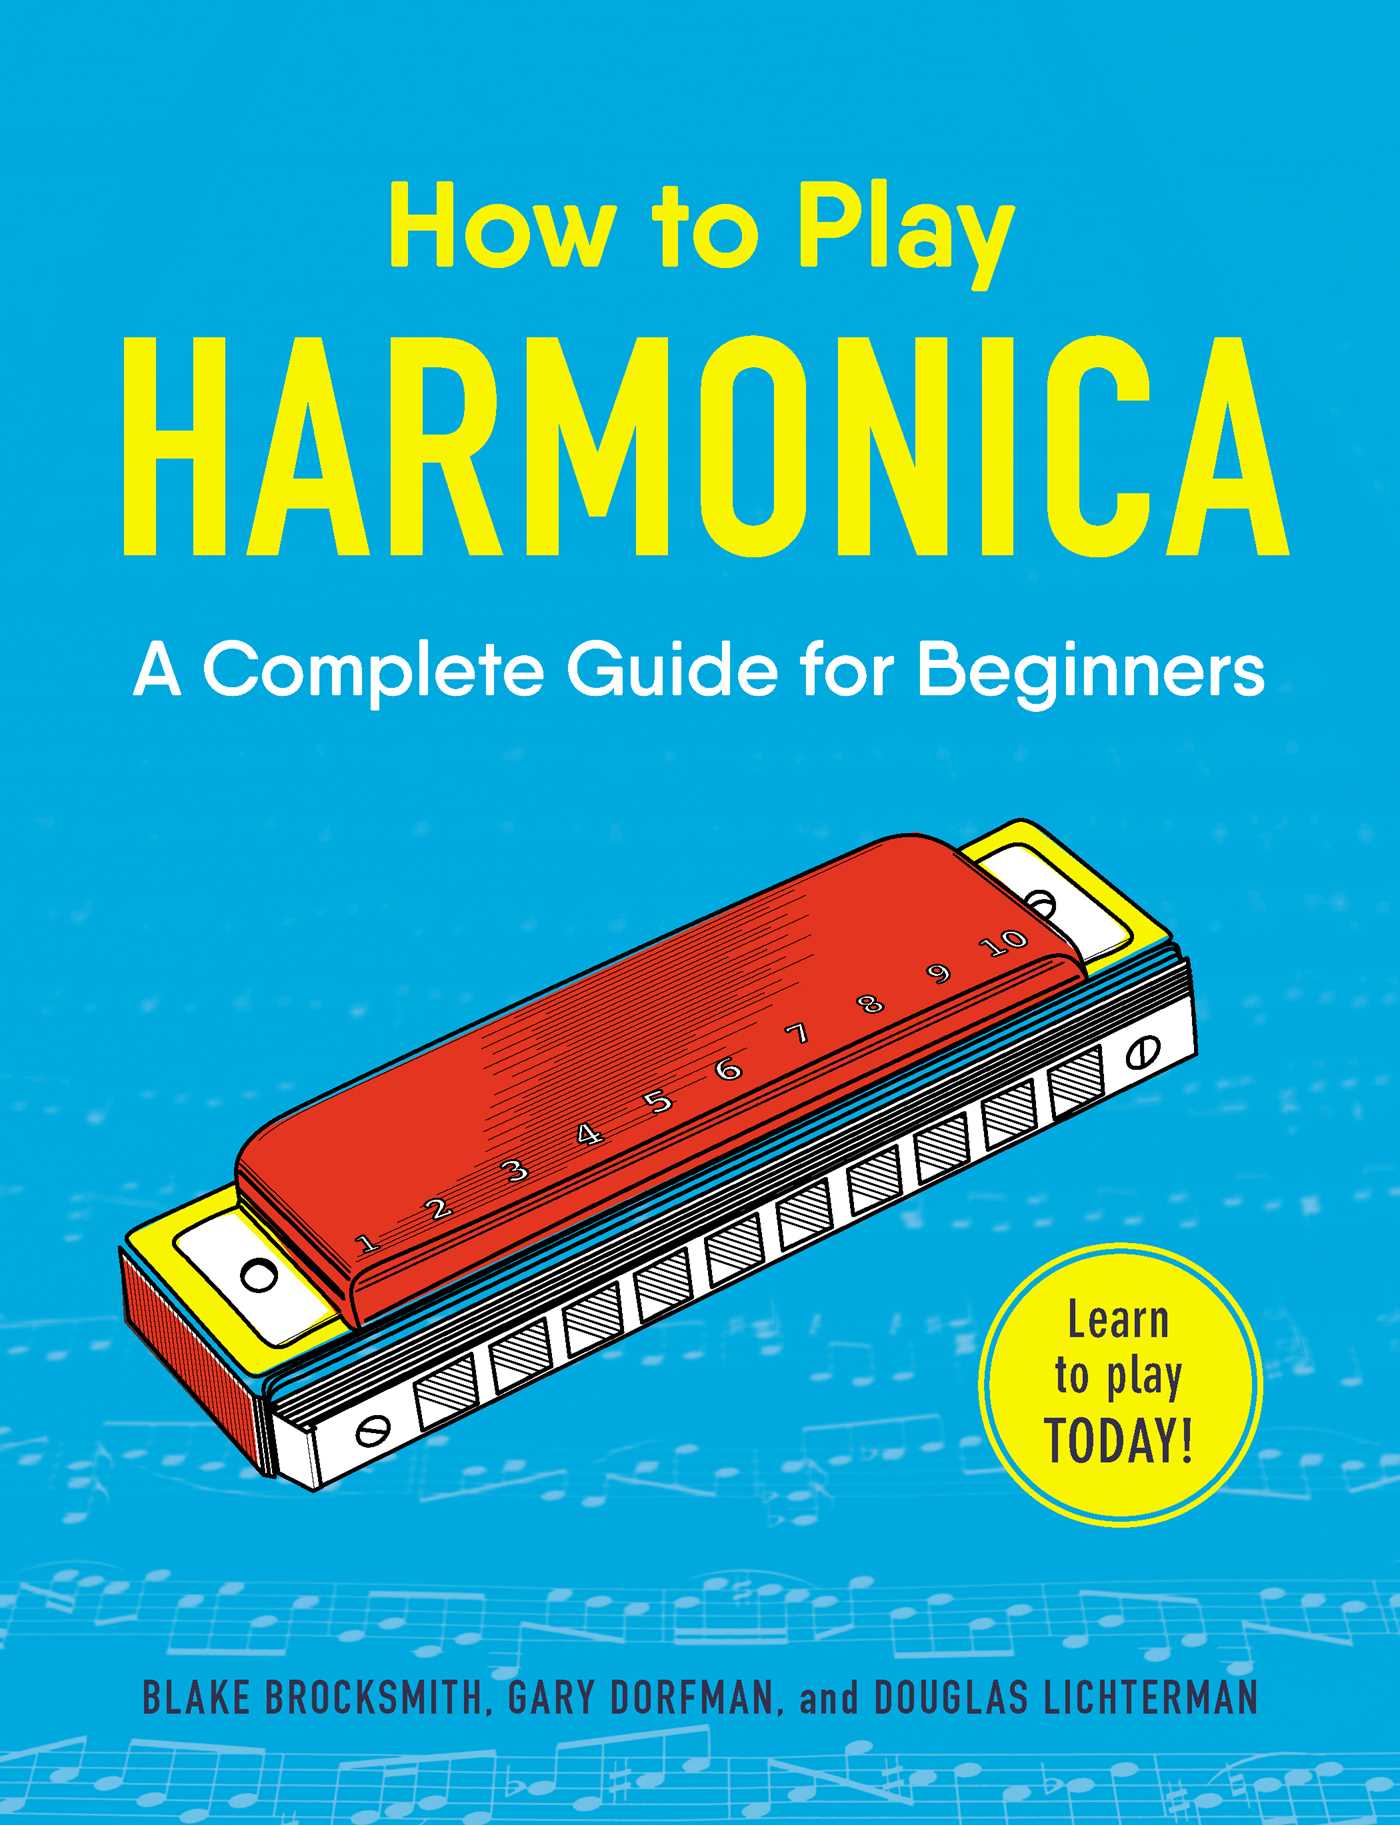 Choosing The Right Harmonica